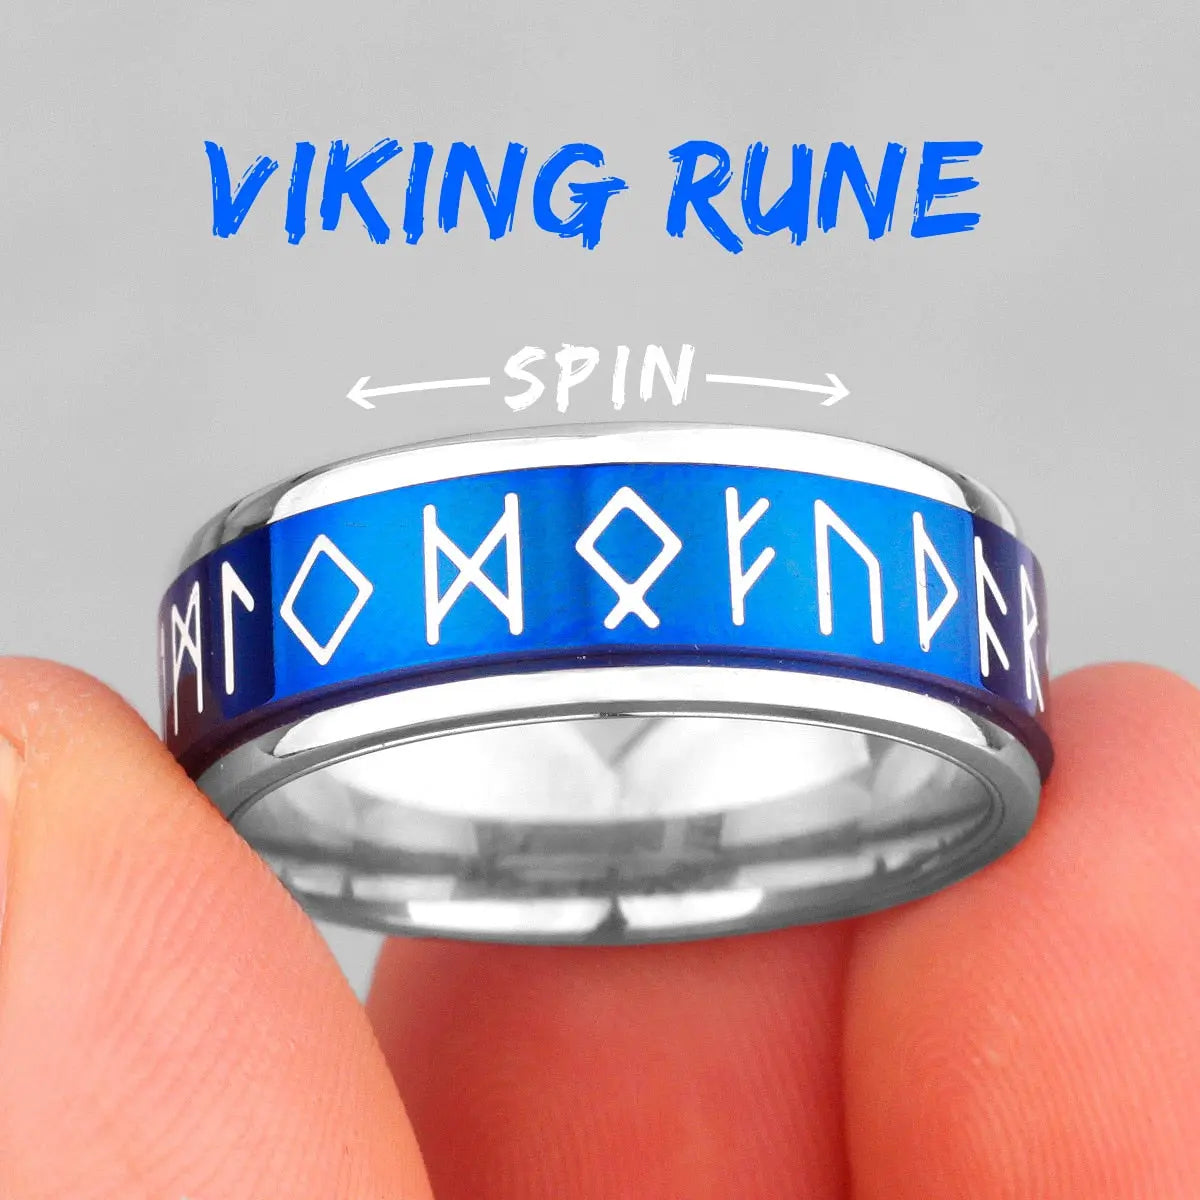 Viking Runic Ring - Mens Spin Rings Glow In the Dark Rings for Men